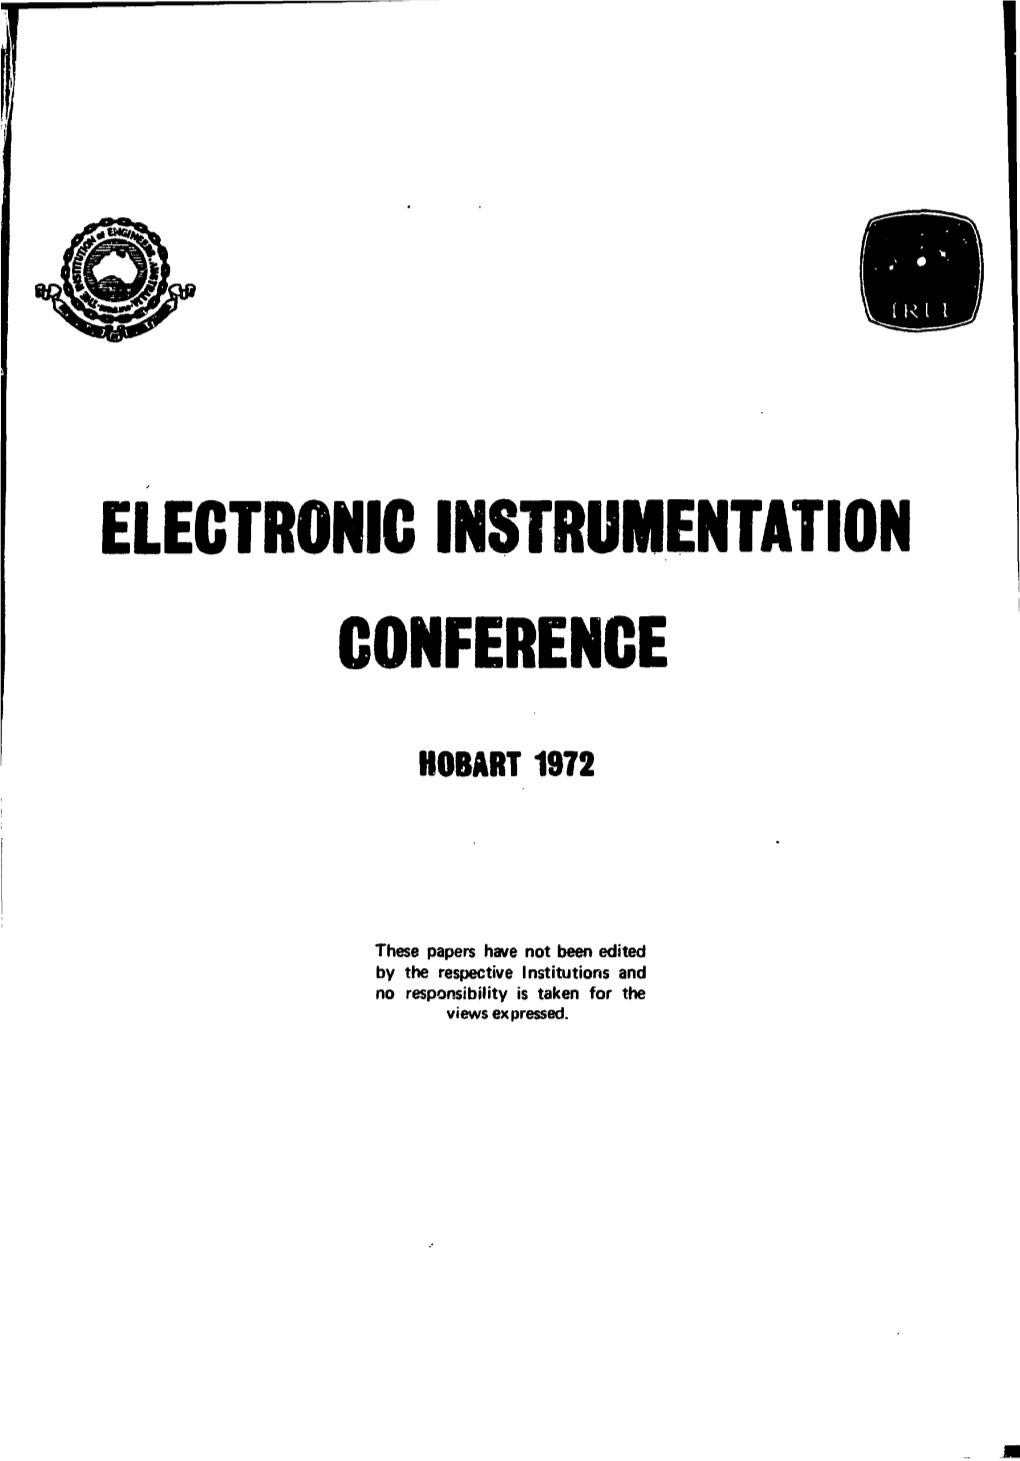 Electronic Instrumentation Conference